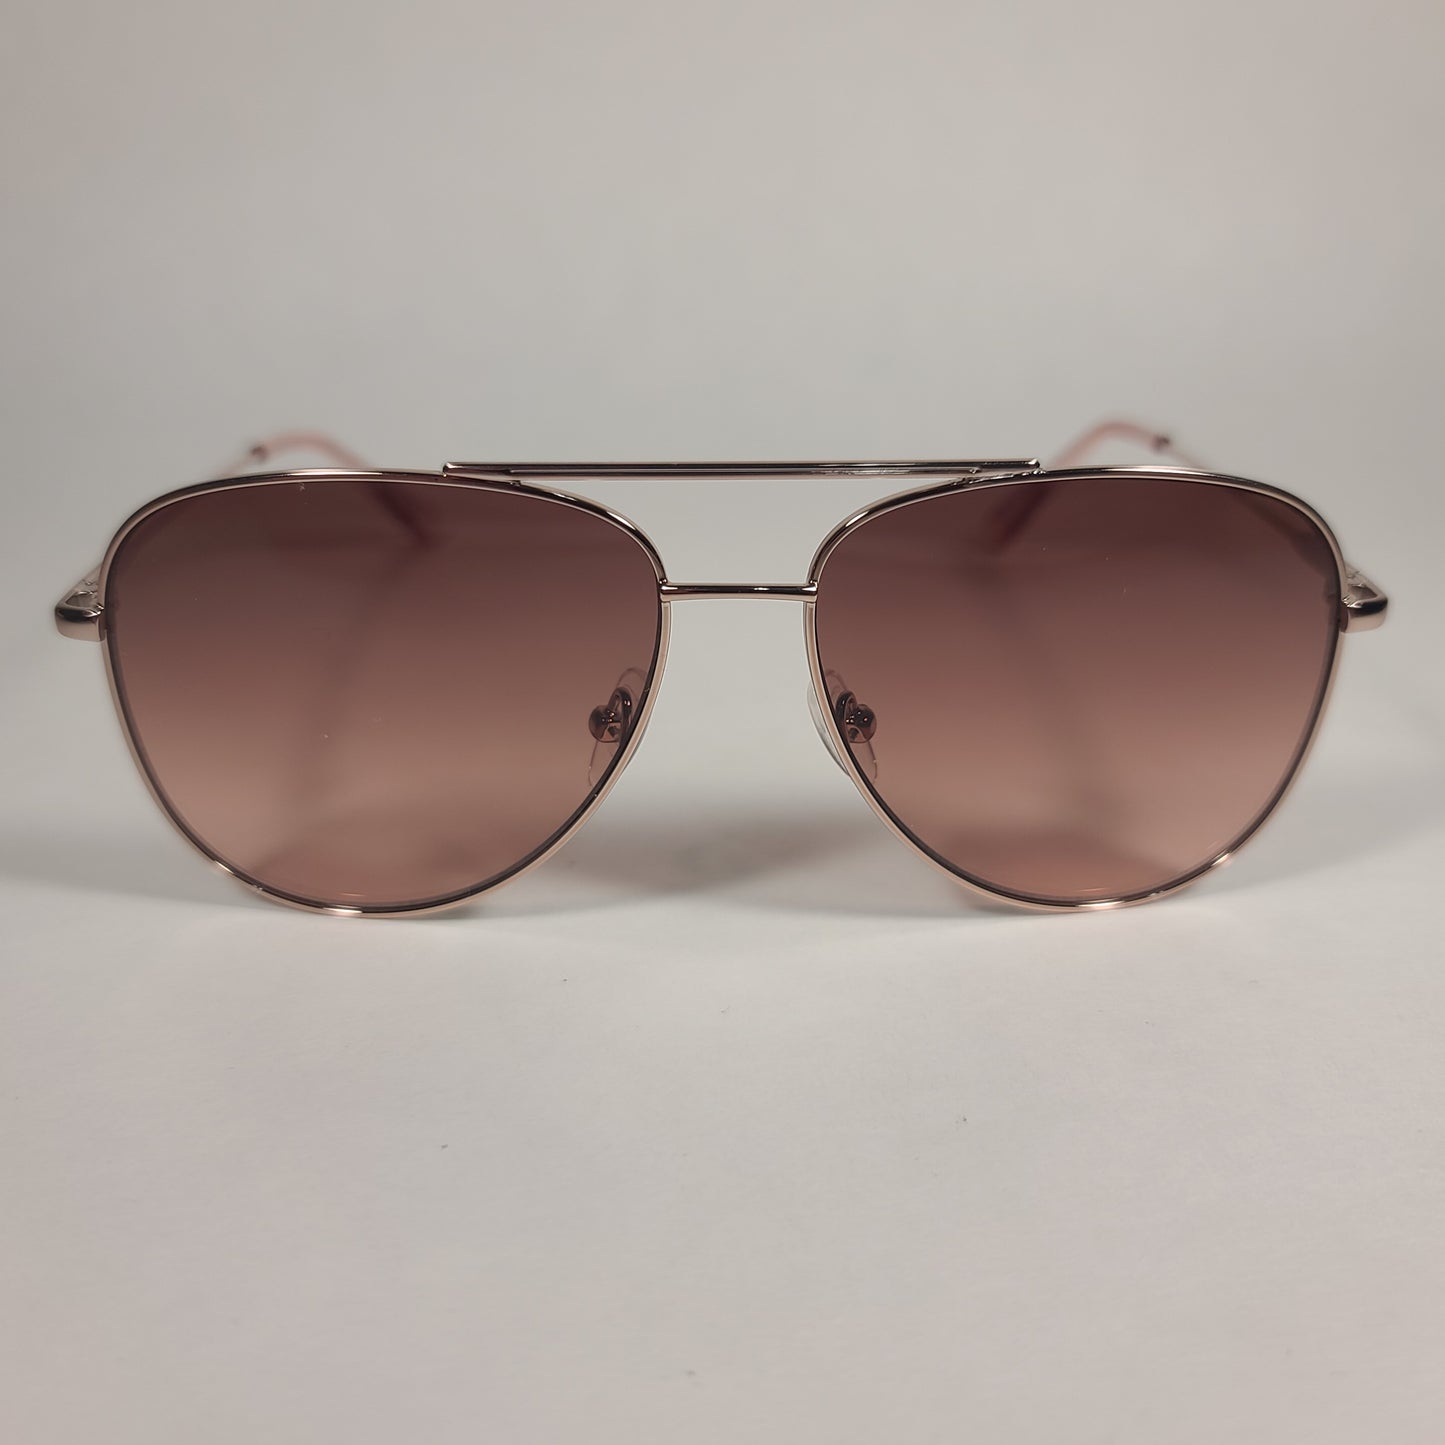 Calvin Klein Aviator Pilot Sunglasses CK19133S 780 Rose Gold Frame and Lens - Sunglasses